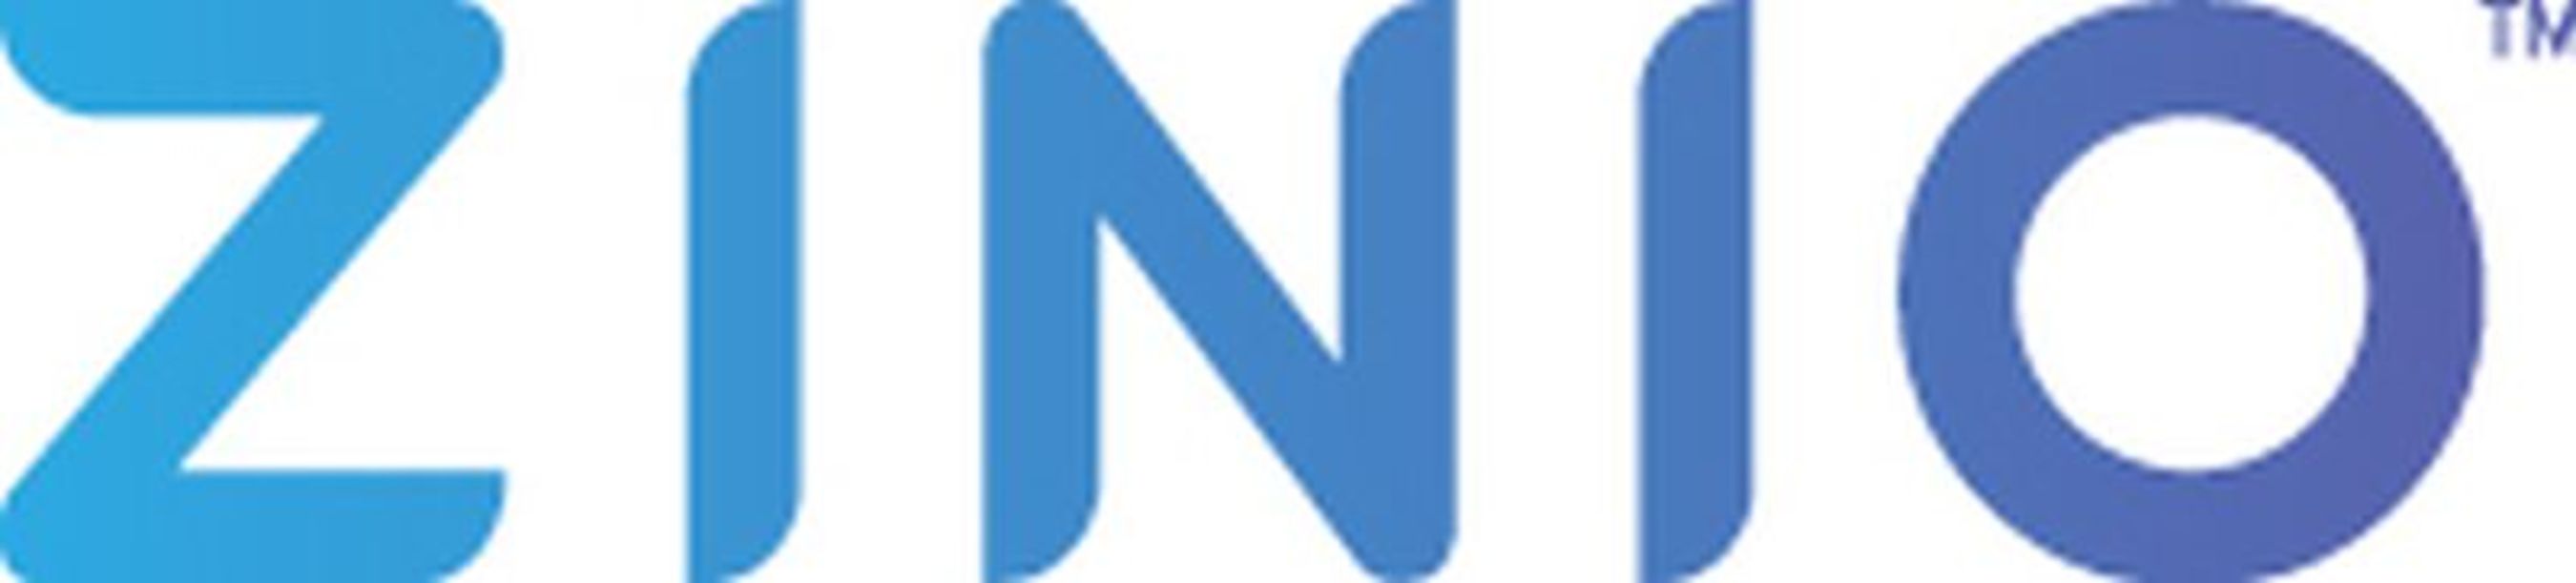 Zinio logo (PRNewsFoto/Zinio LLC)